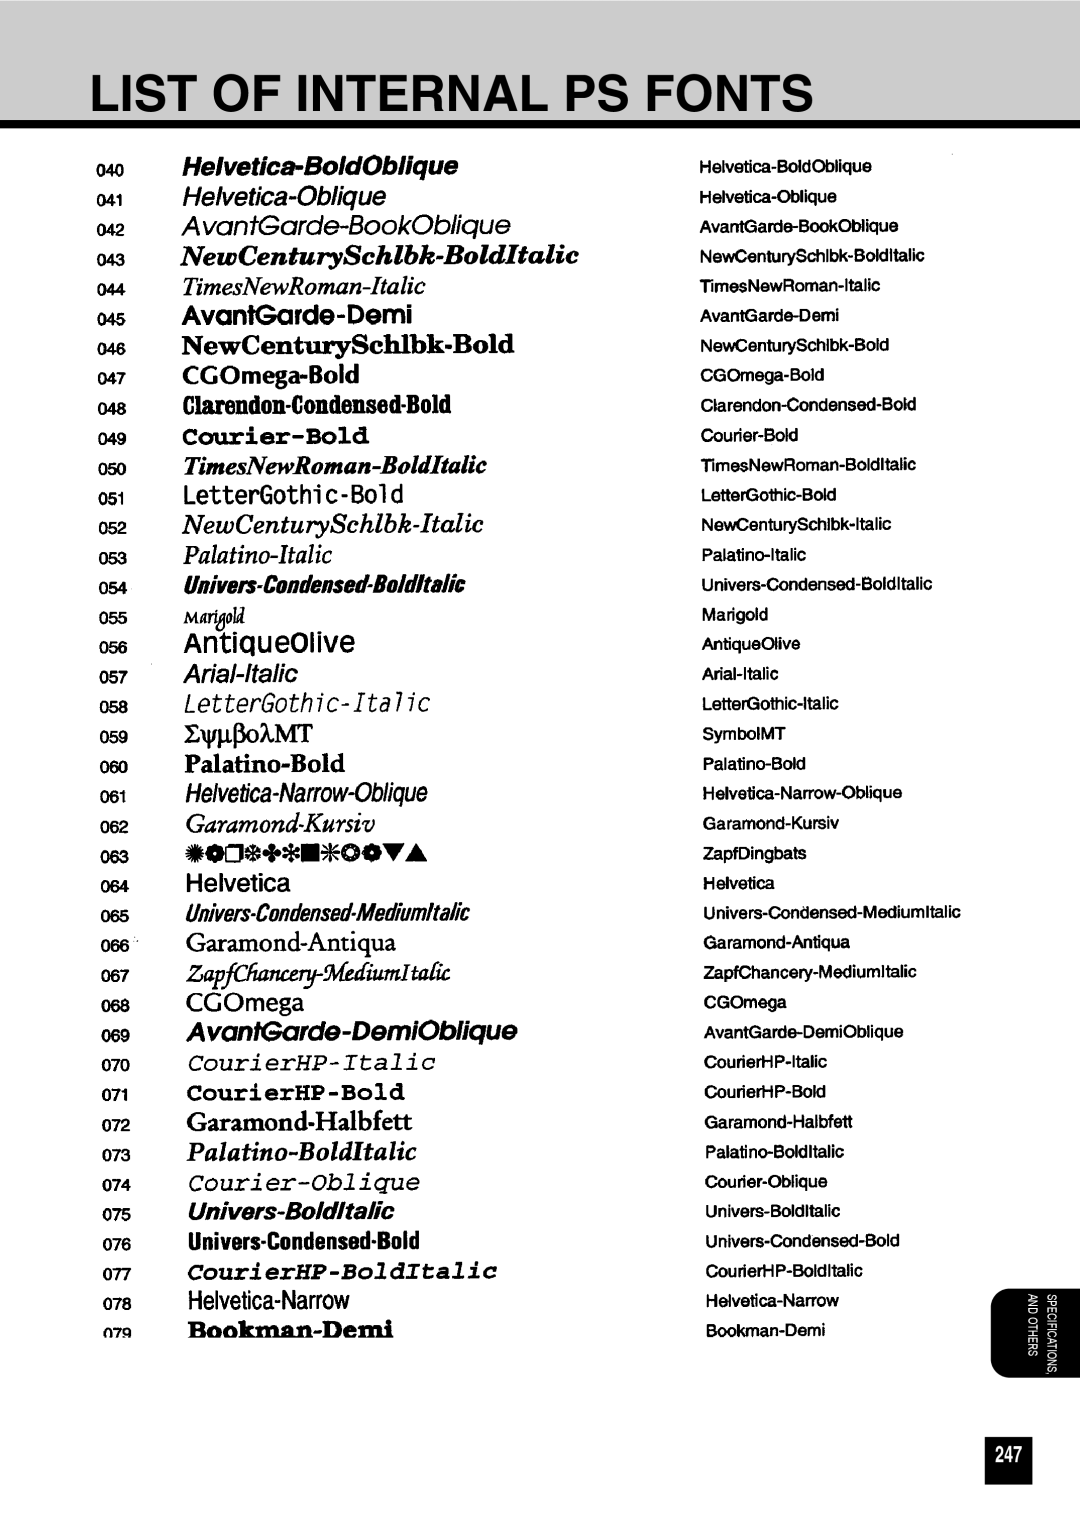 Toshiba GA-1031 manual List of Internal PS Fonts, 247 